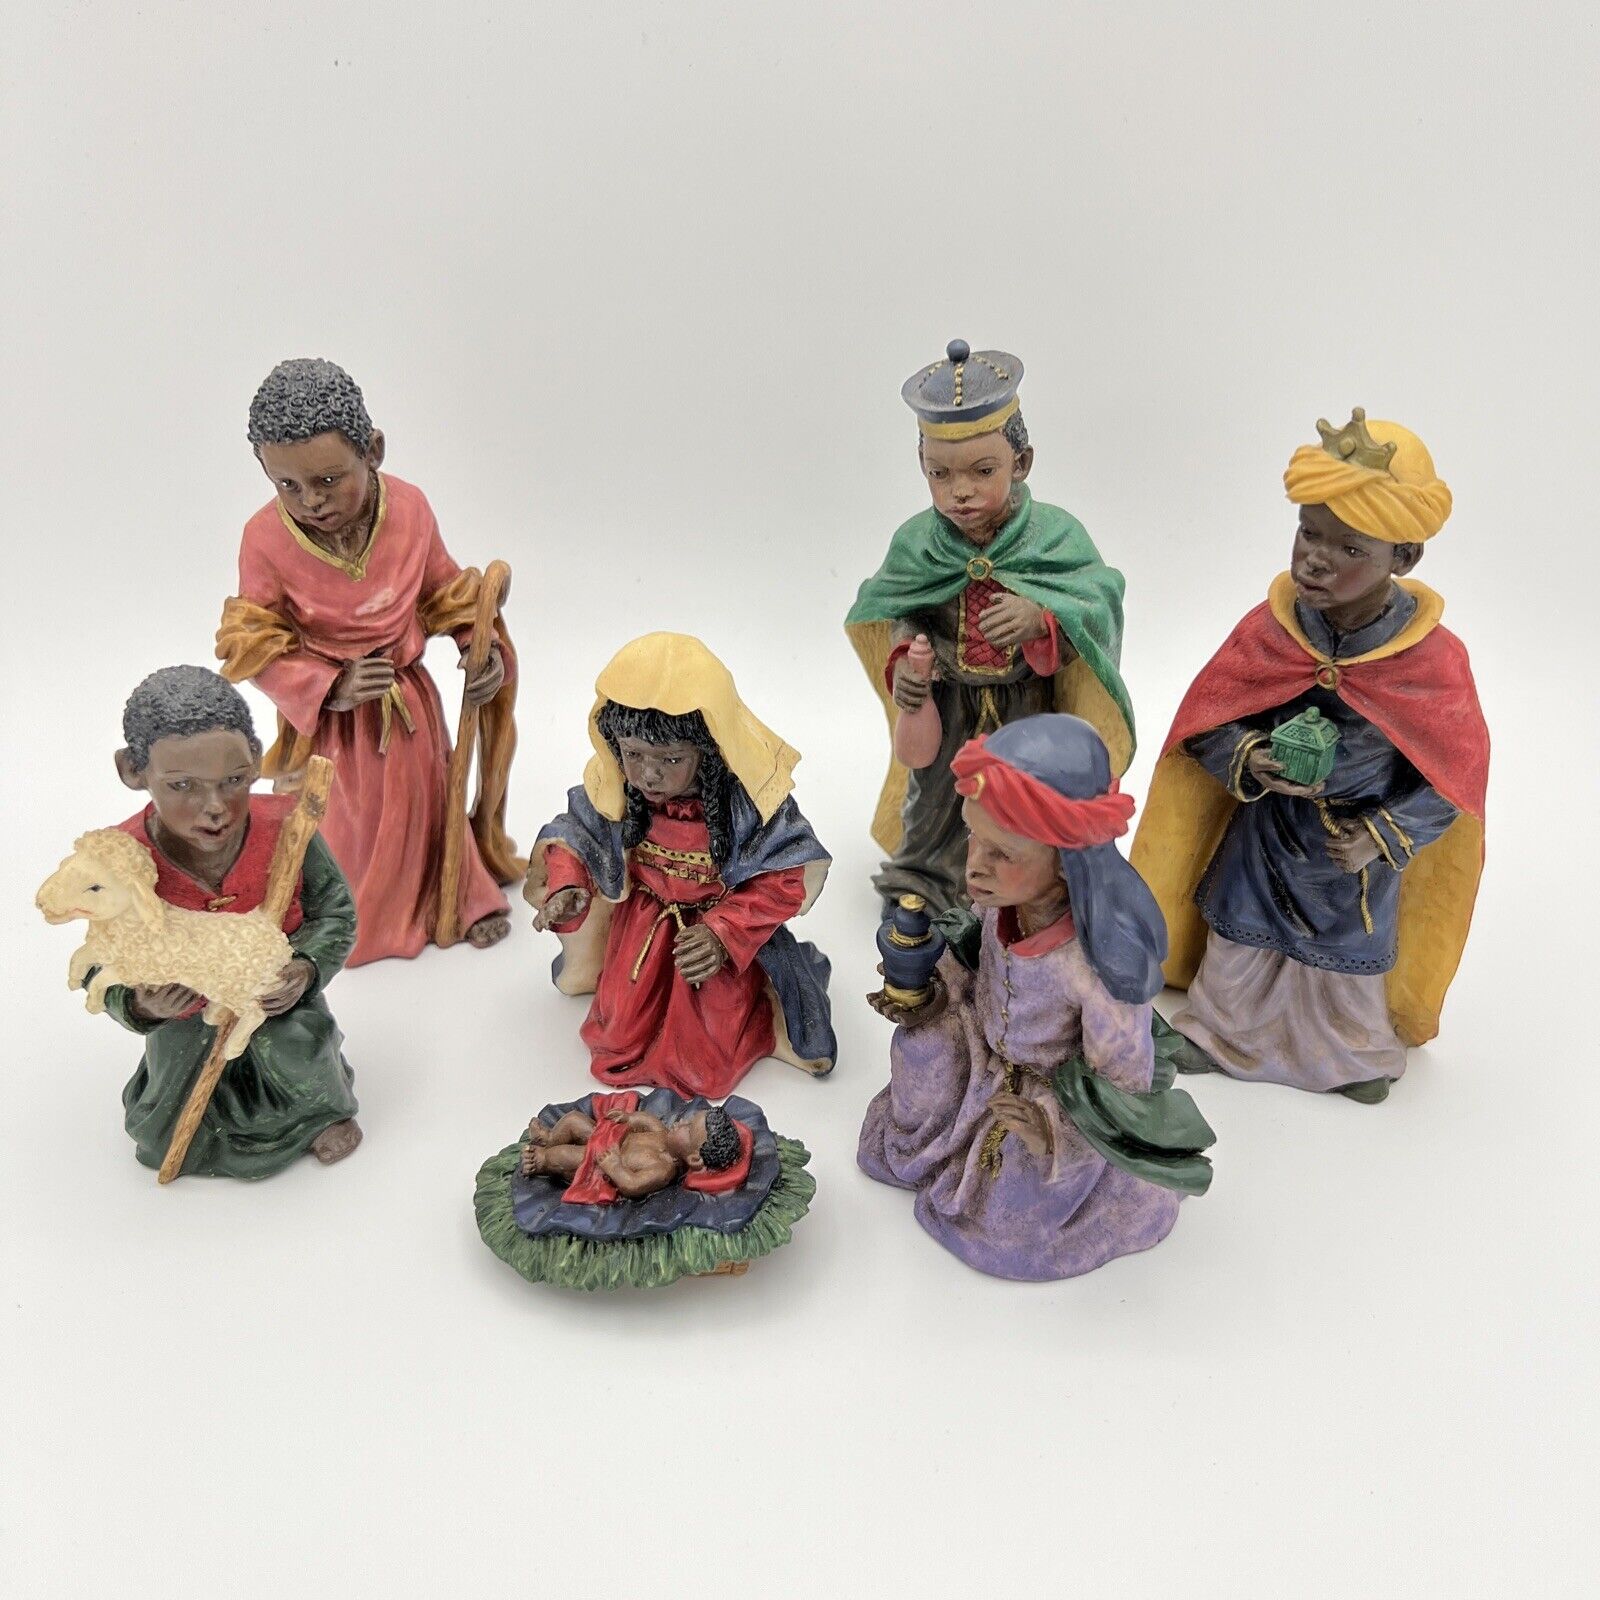 DILLARDS Trimmings 7 Piece Christmas Heritage Nativity Scene Set